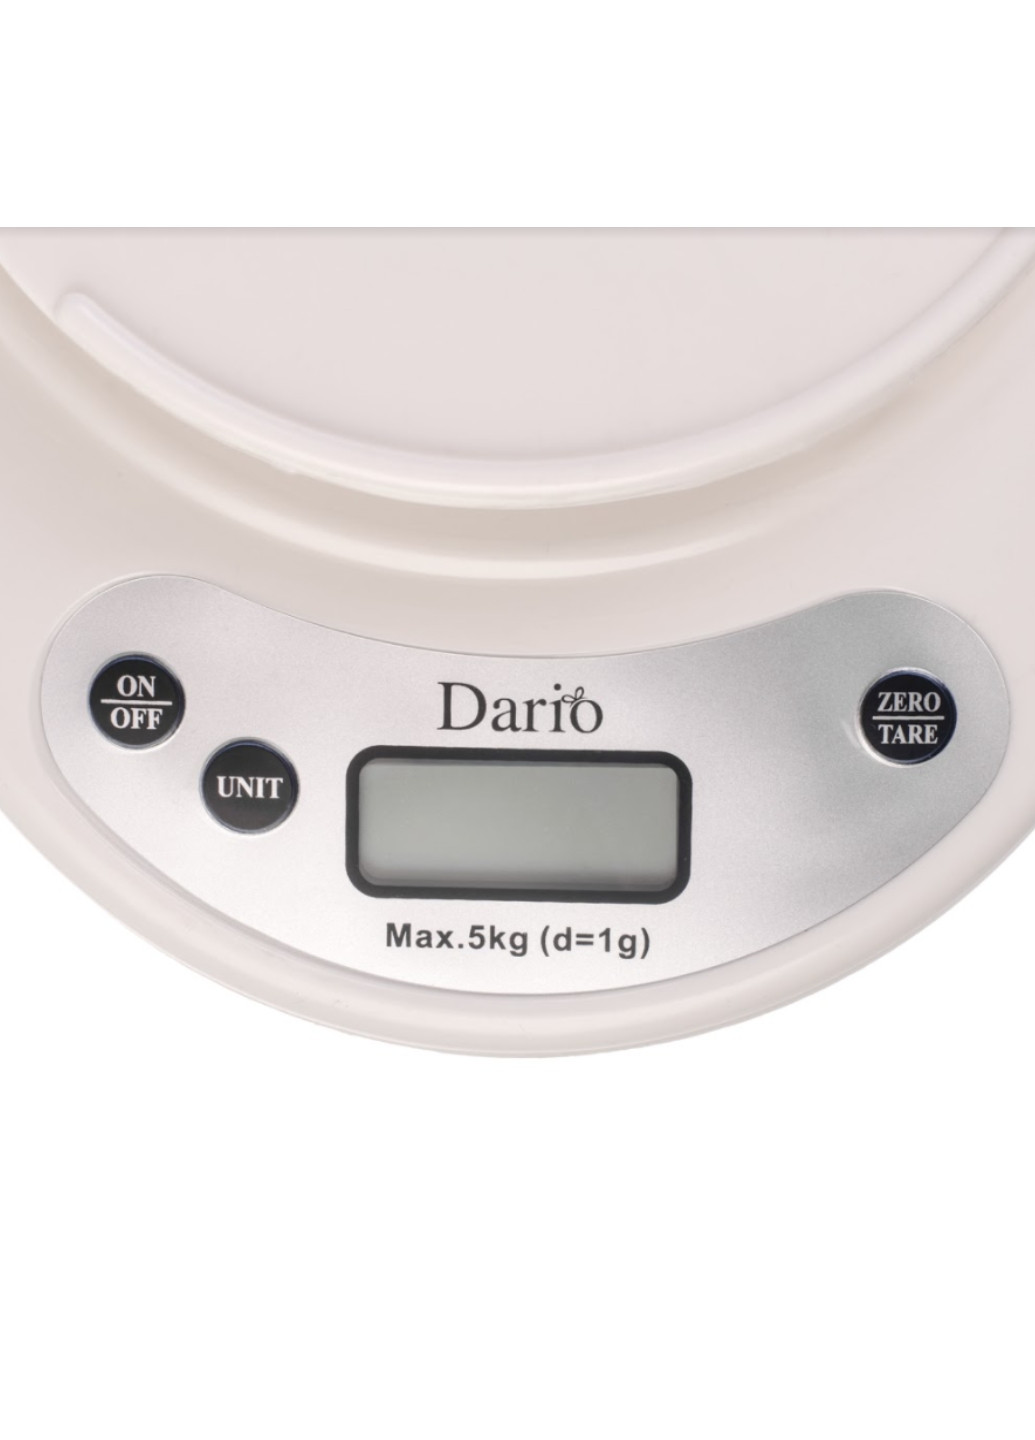 Ваги кухонні з чашею DKS-505С до 5 кг Dario dks-505с_white (229082966)